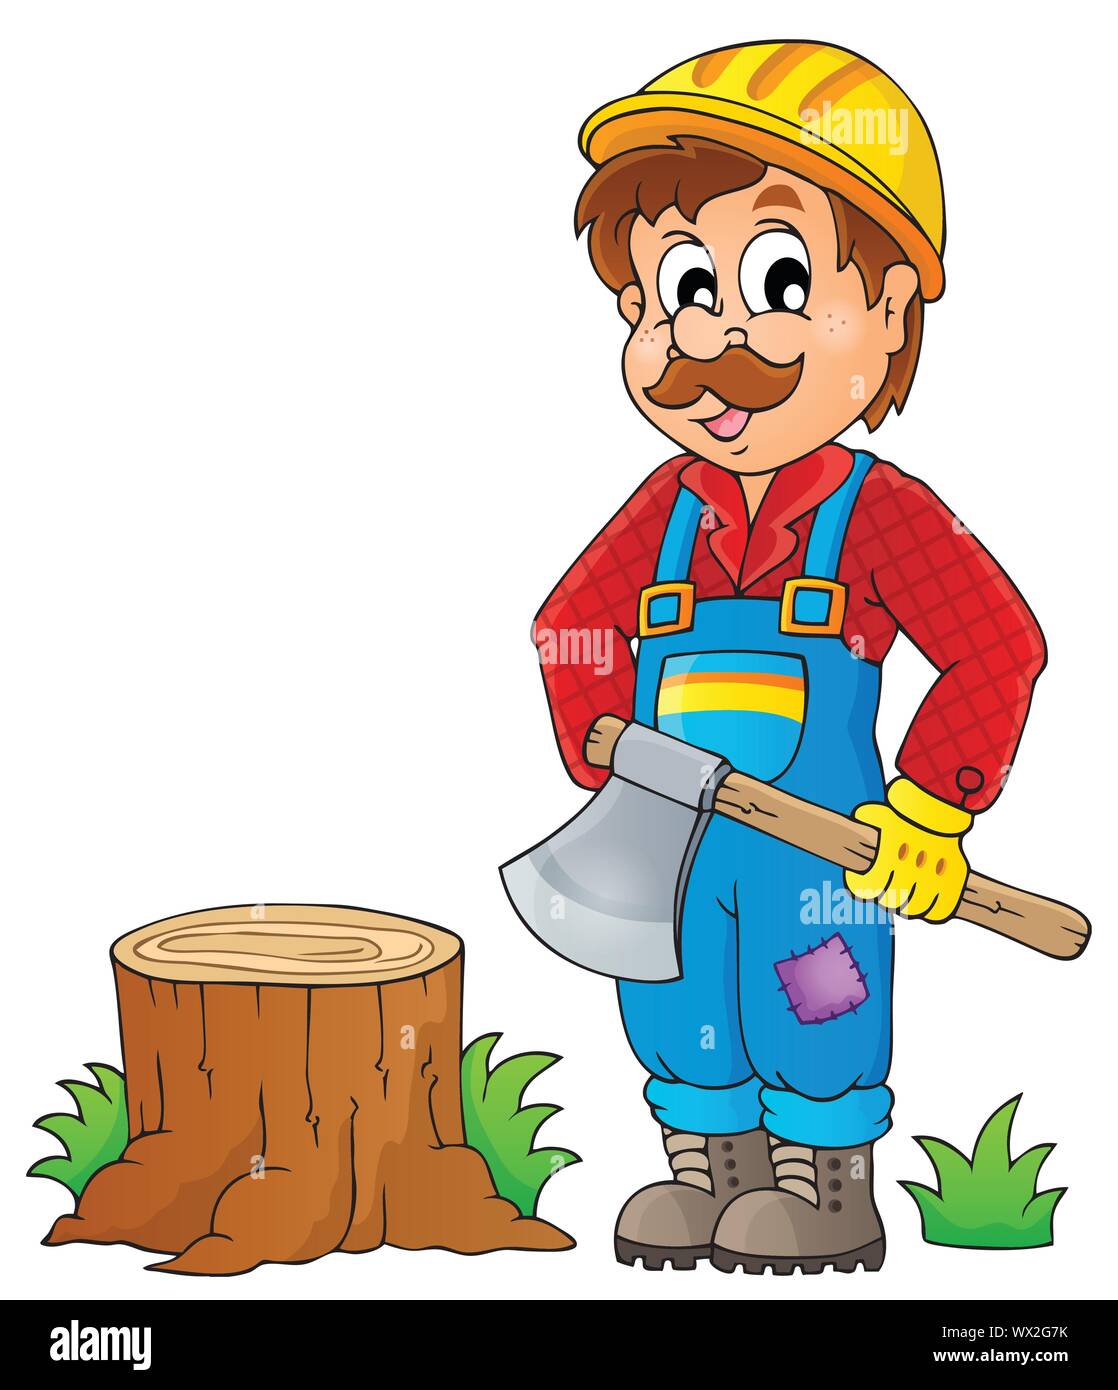 Image with lumberjack theme 1 Stock Vector